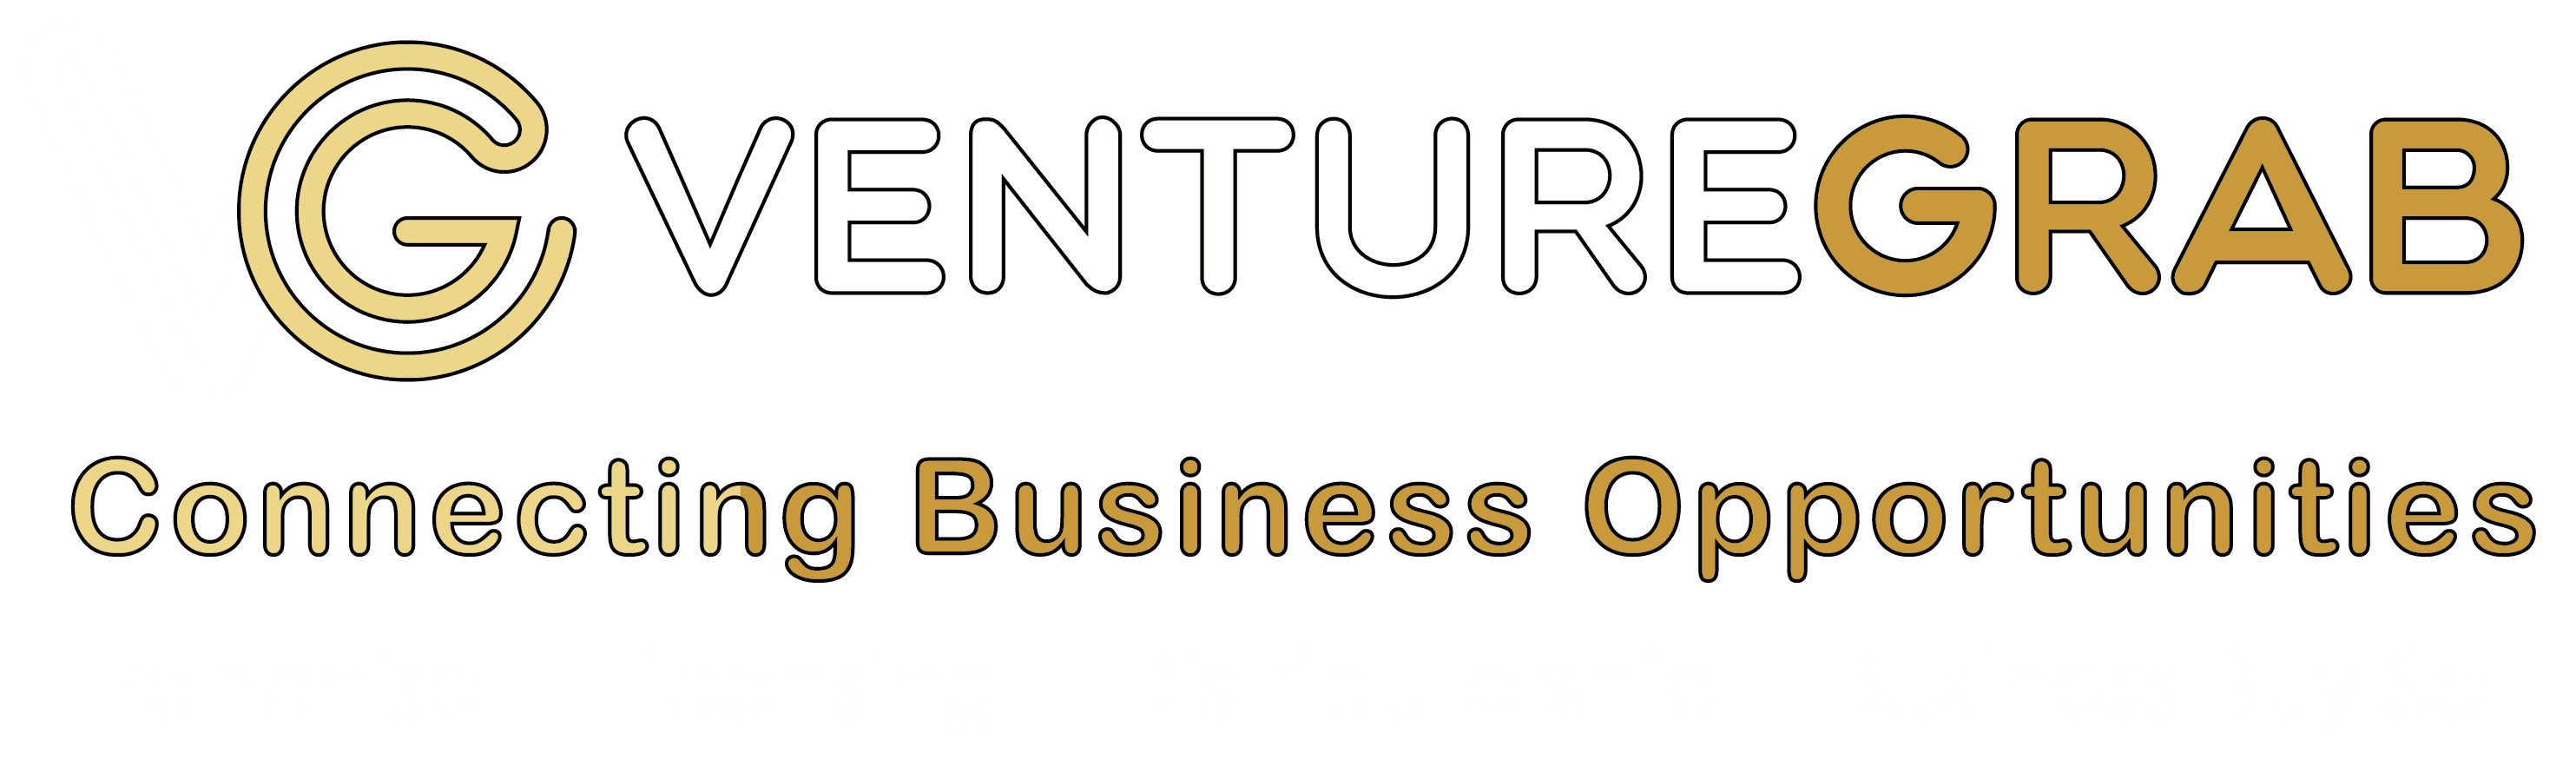 Venturegrab logo2